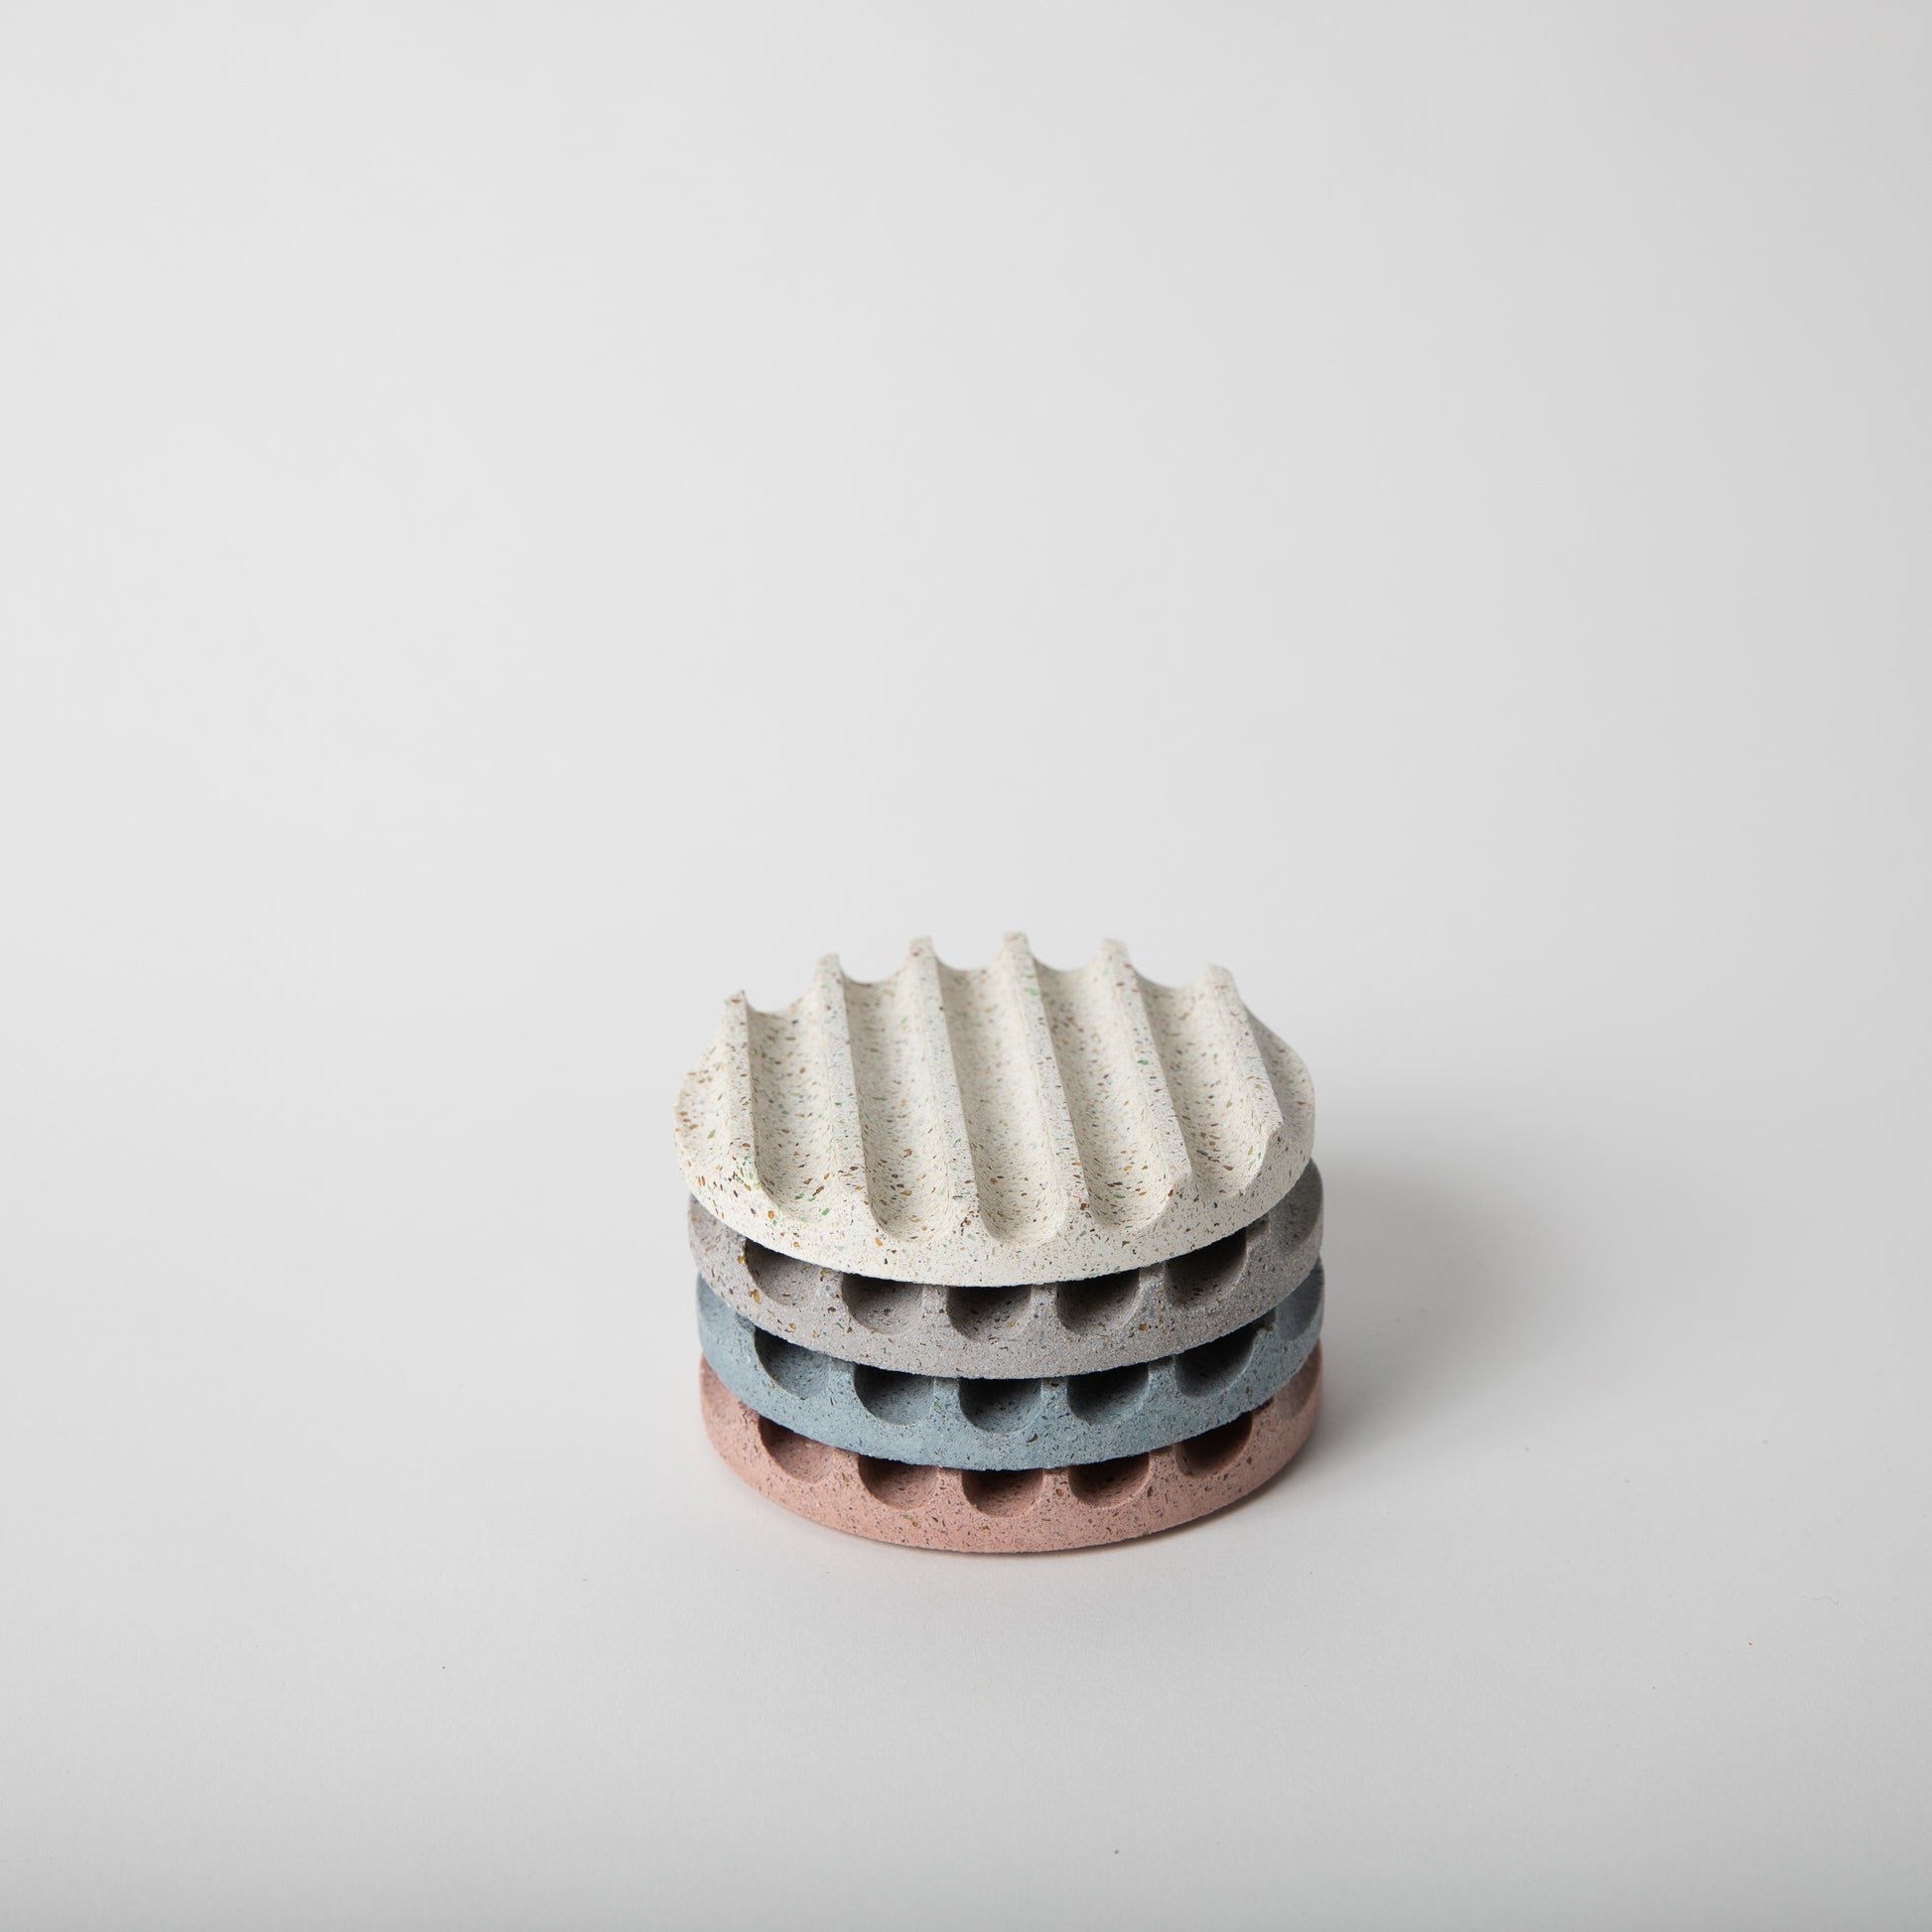 Terrazzo concrete coasters in a neutral color set of 4. 